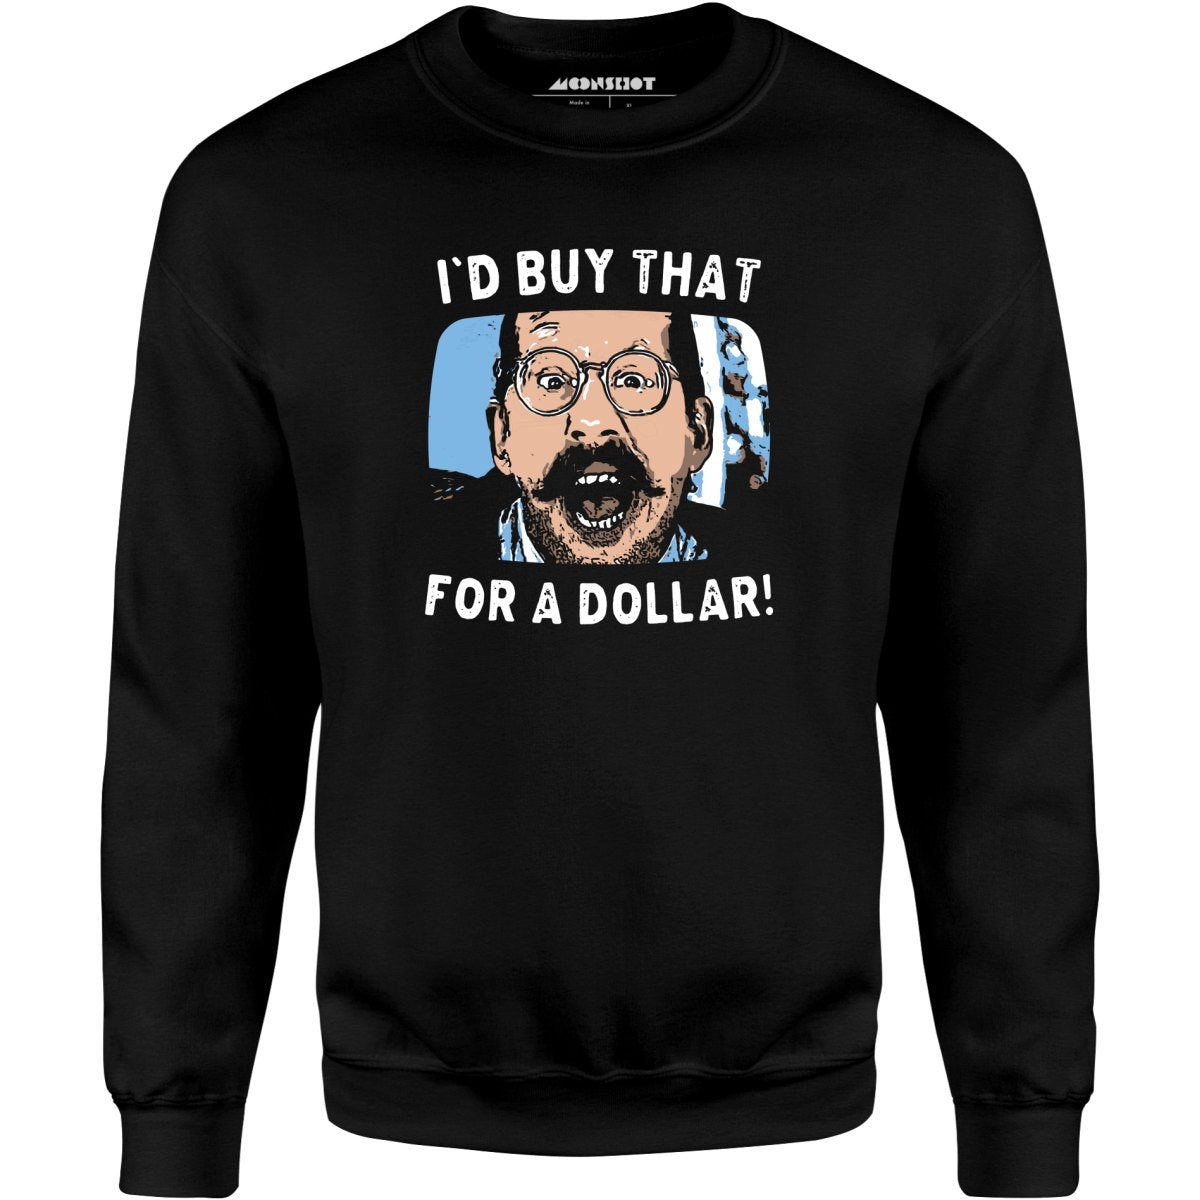 I'd Buy That For a Dollar - Unisex Sweatshirt